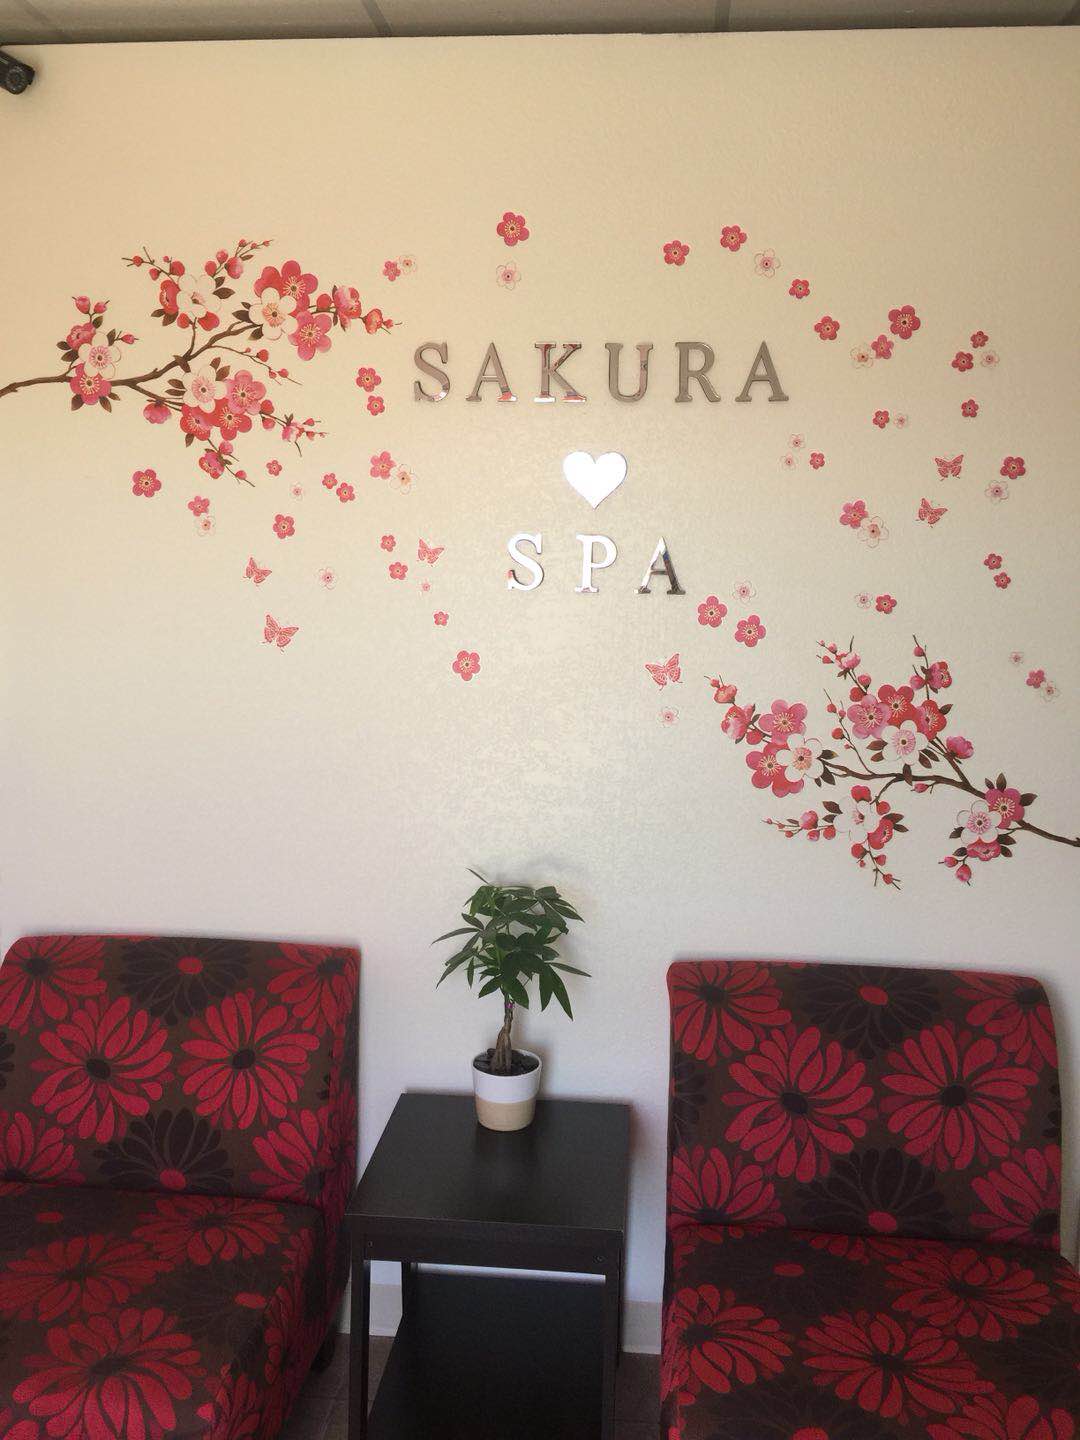 Sakura Spa